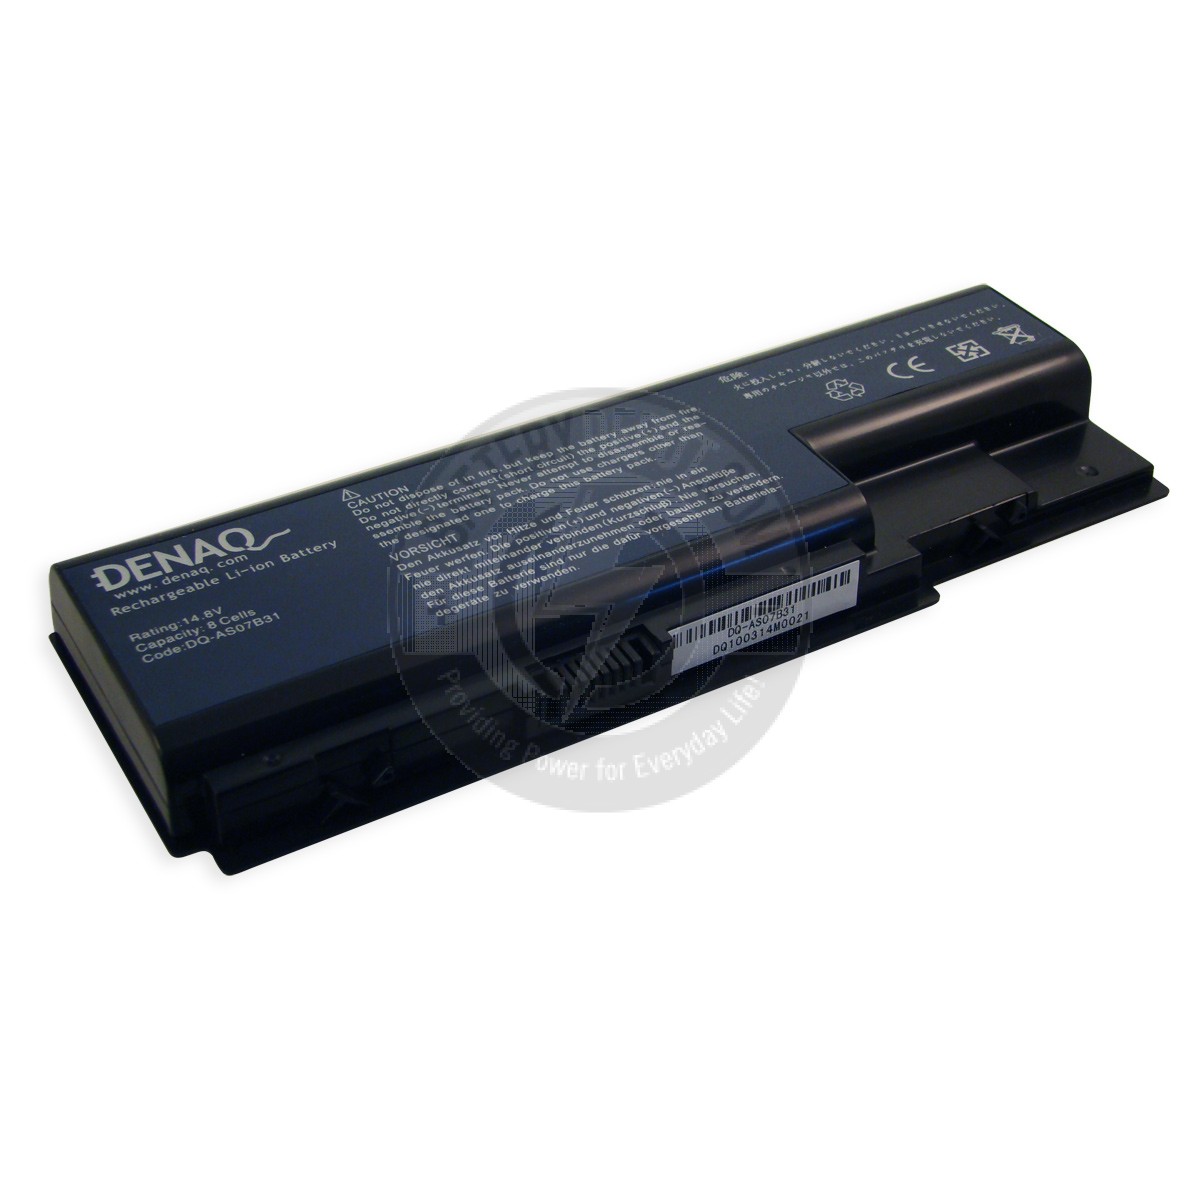 Laptop Battery for Acer